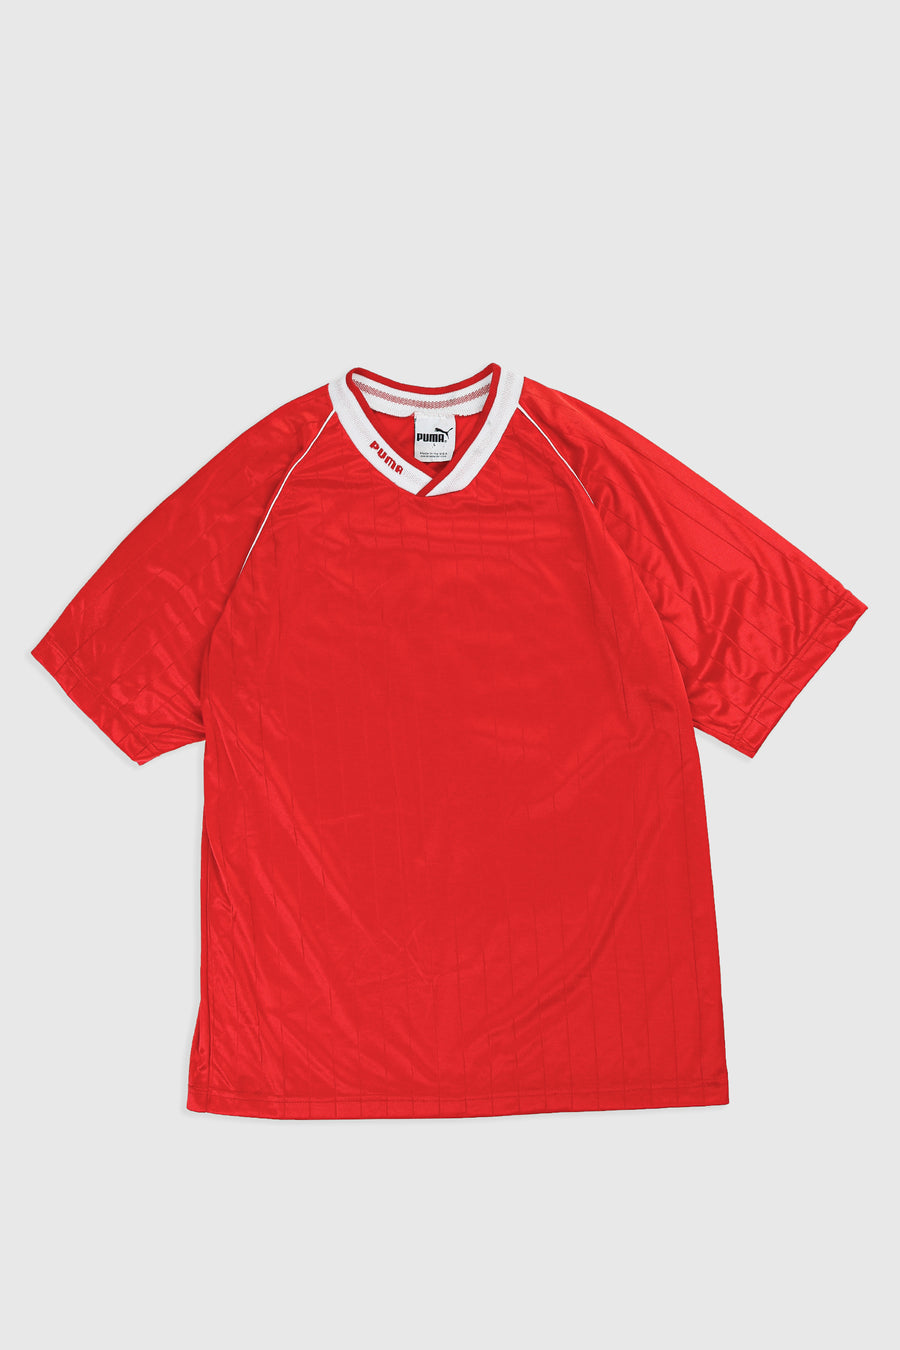 Vintage Puma Soccer Jersey - L